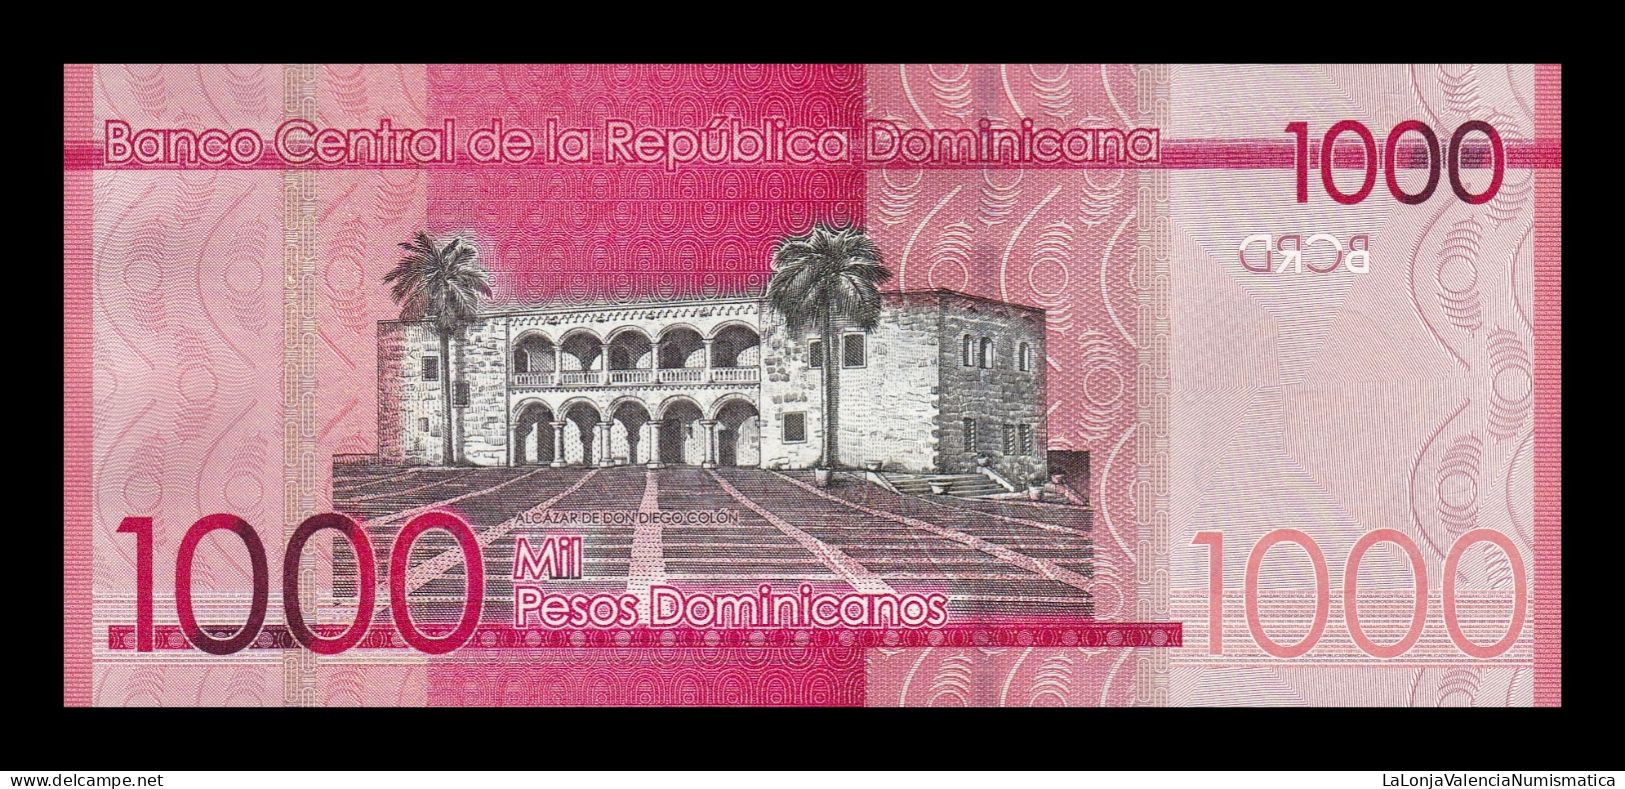 República Dominicana 1000 Pesos Dominicanos 2014 Pick 193a Low Serial 865 Sc Unc - Dominicana